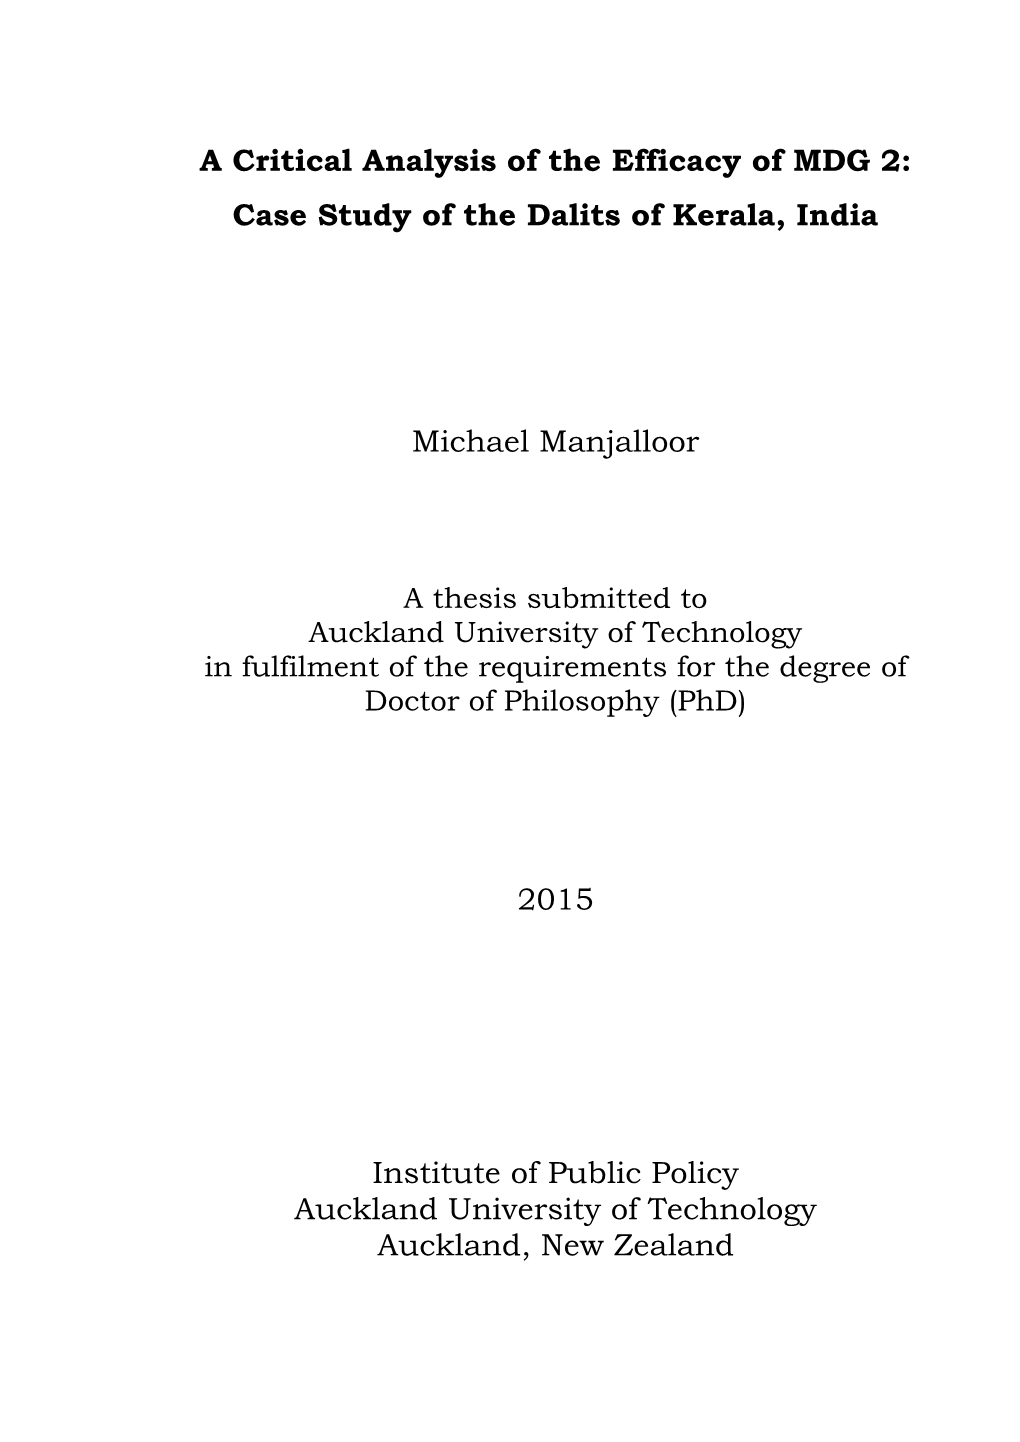 Case Study of the Dalits of Kerala, India Michael Manjalloor